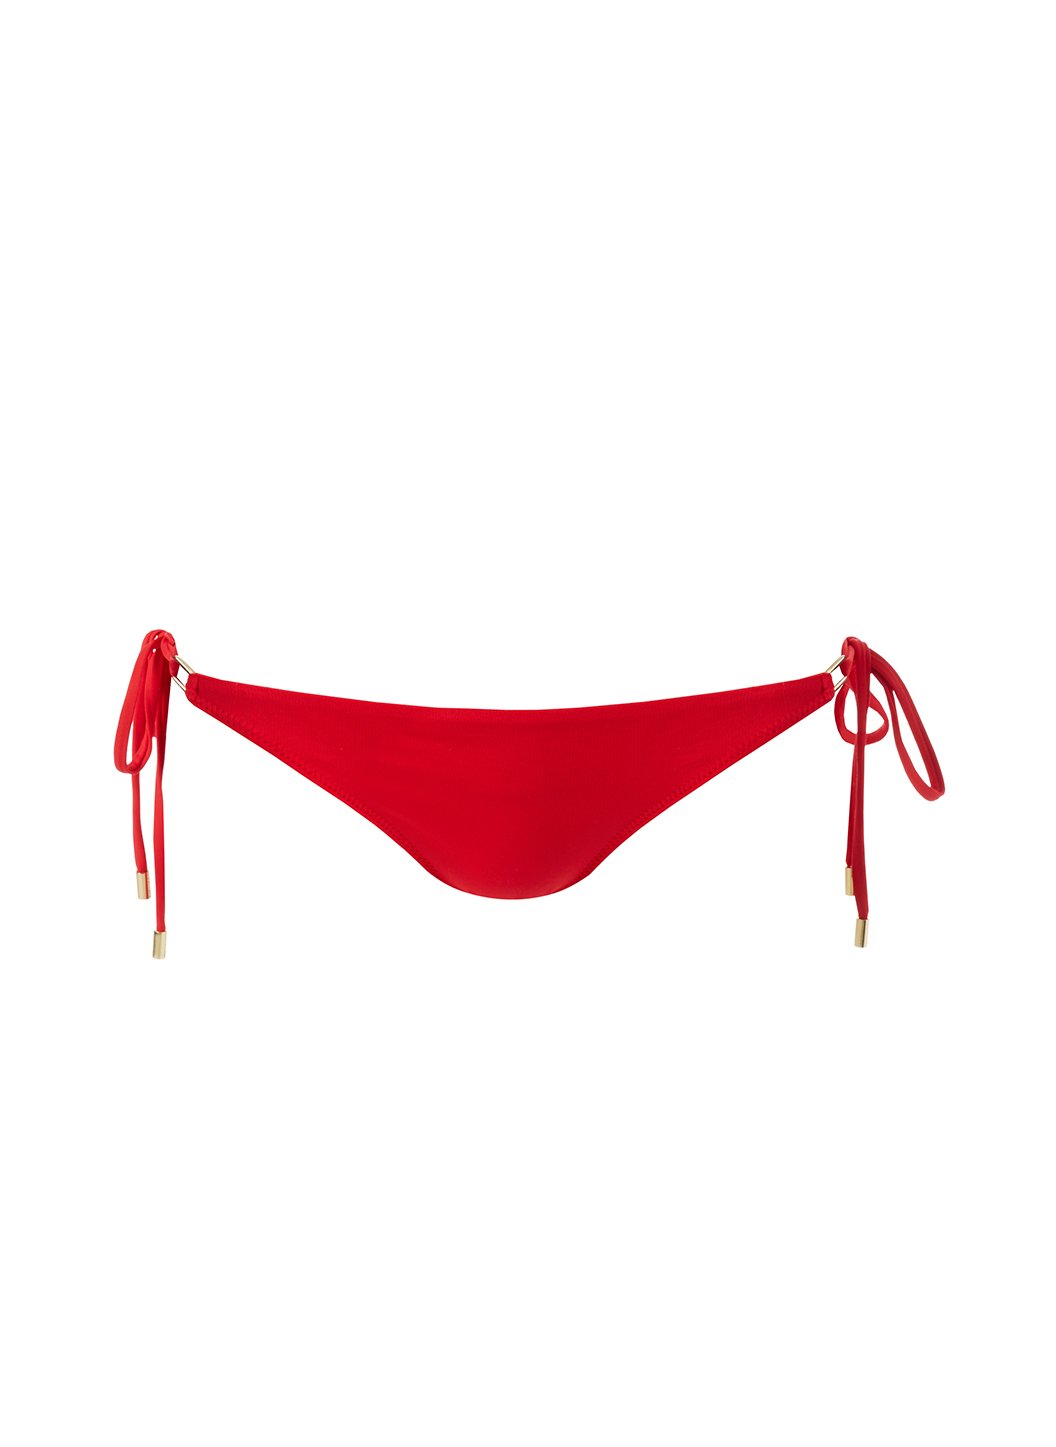 cancun-red-eco-classic-triangle-bikini-bottom